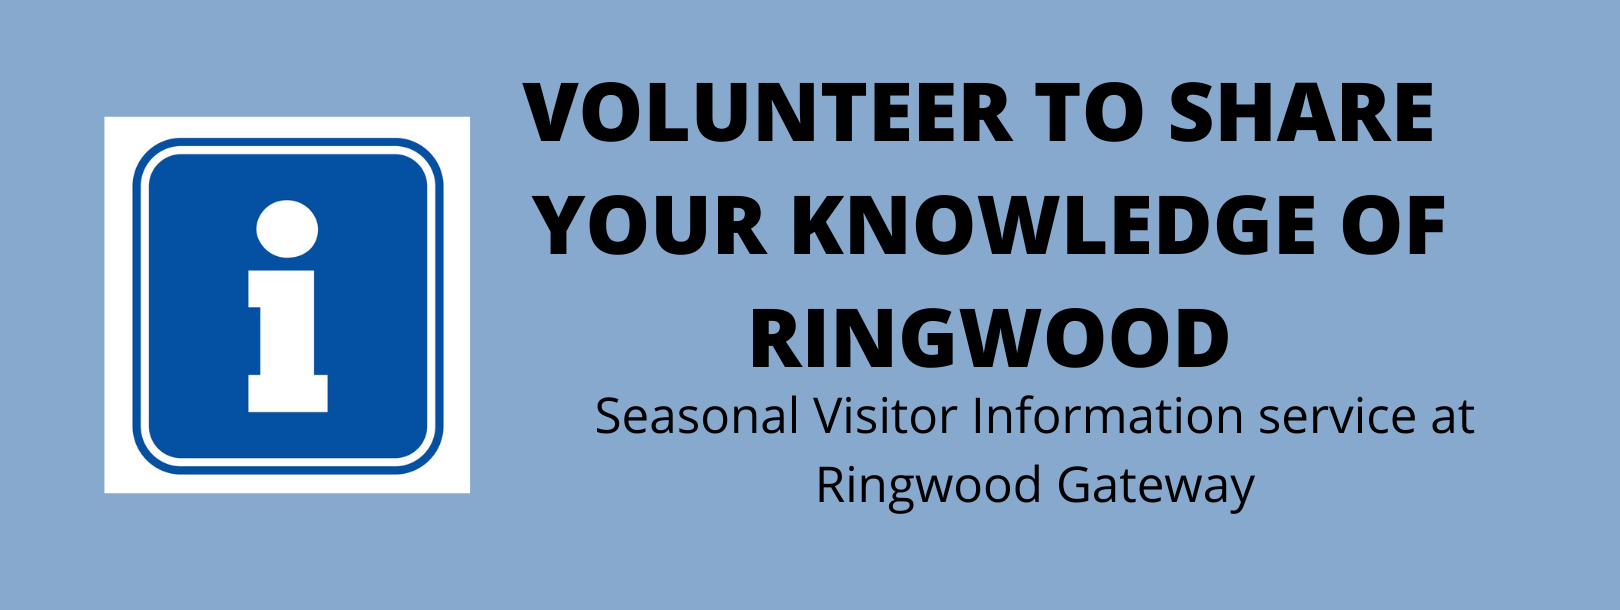 Volunteer to Help Visitors Discover Ringwood